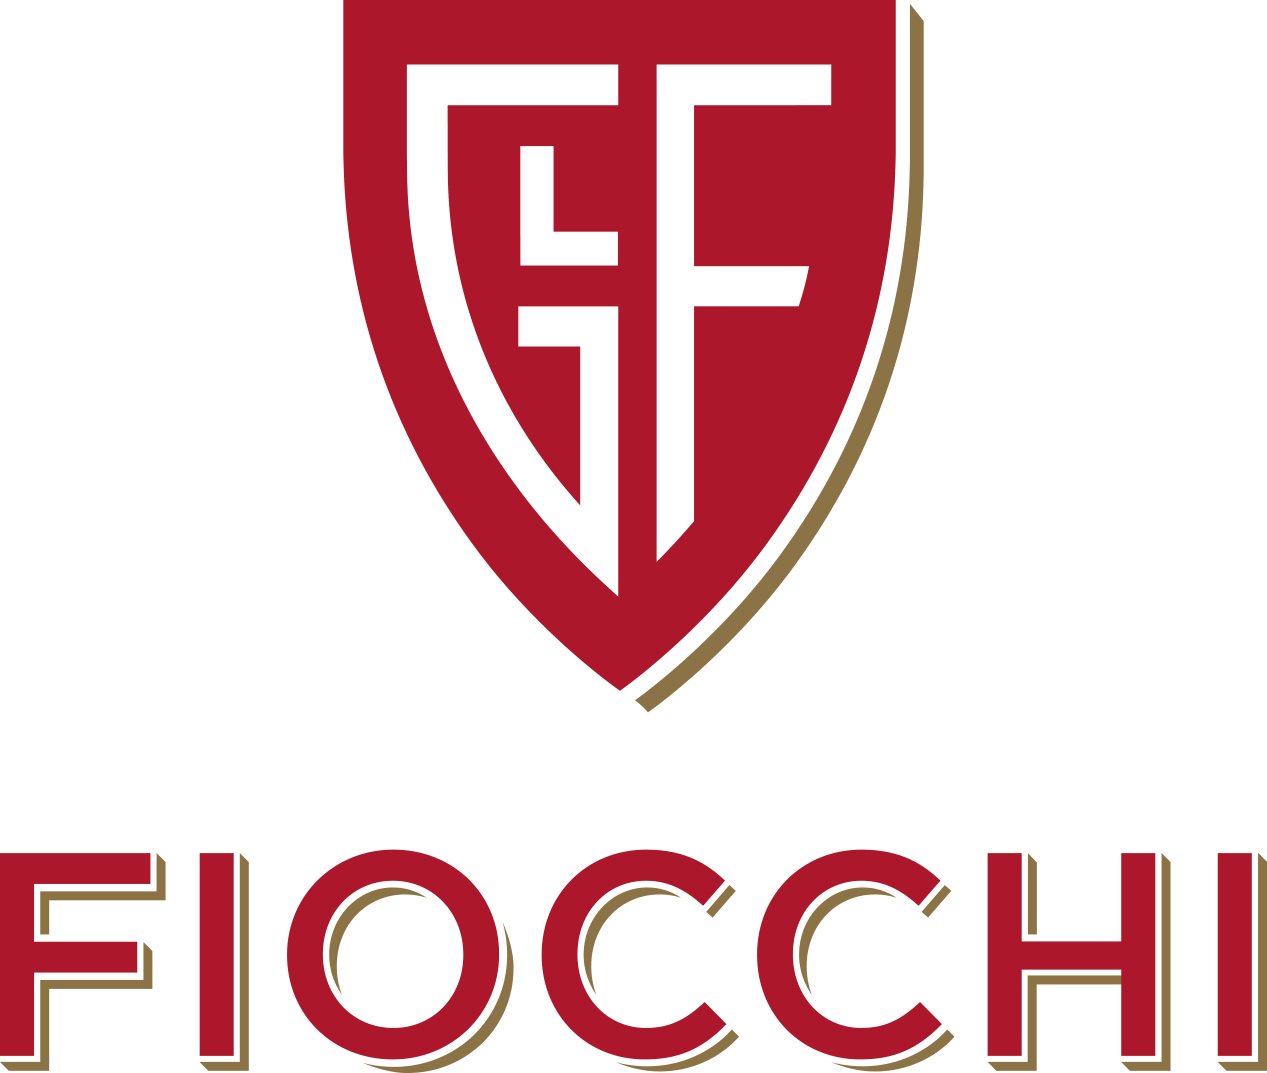 Fiocchi Logo - Vertical.png